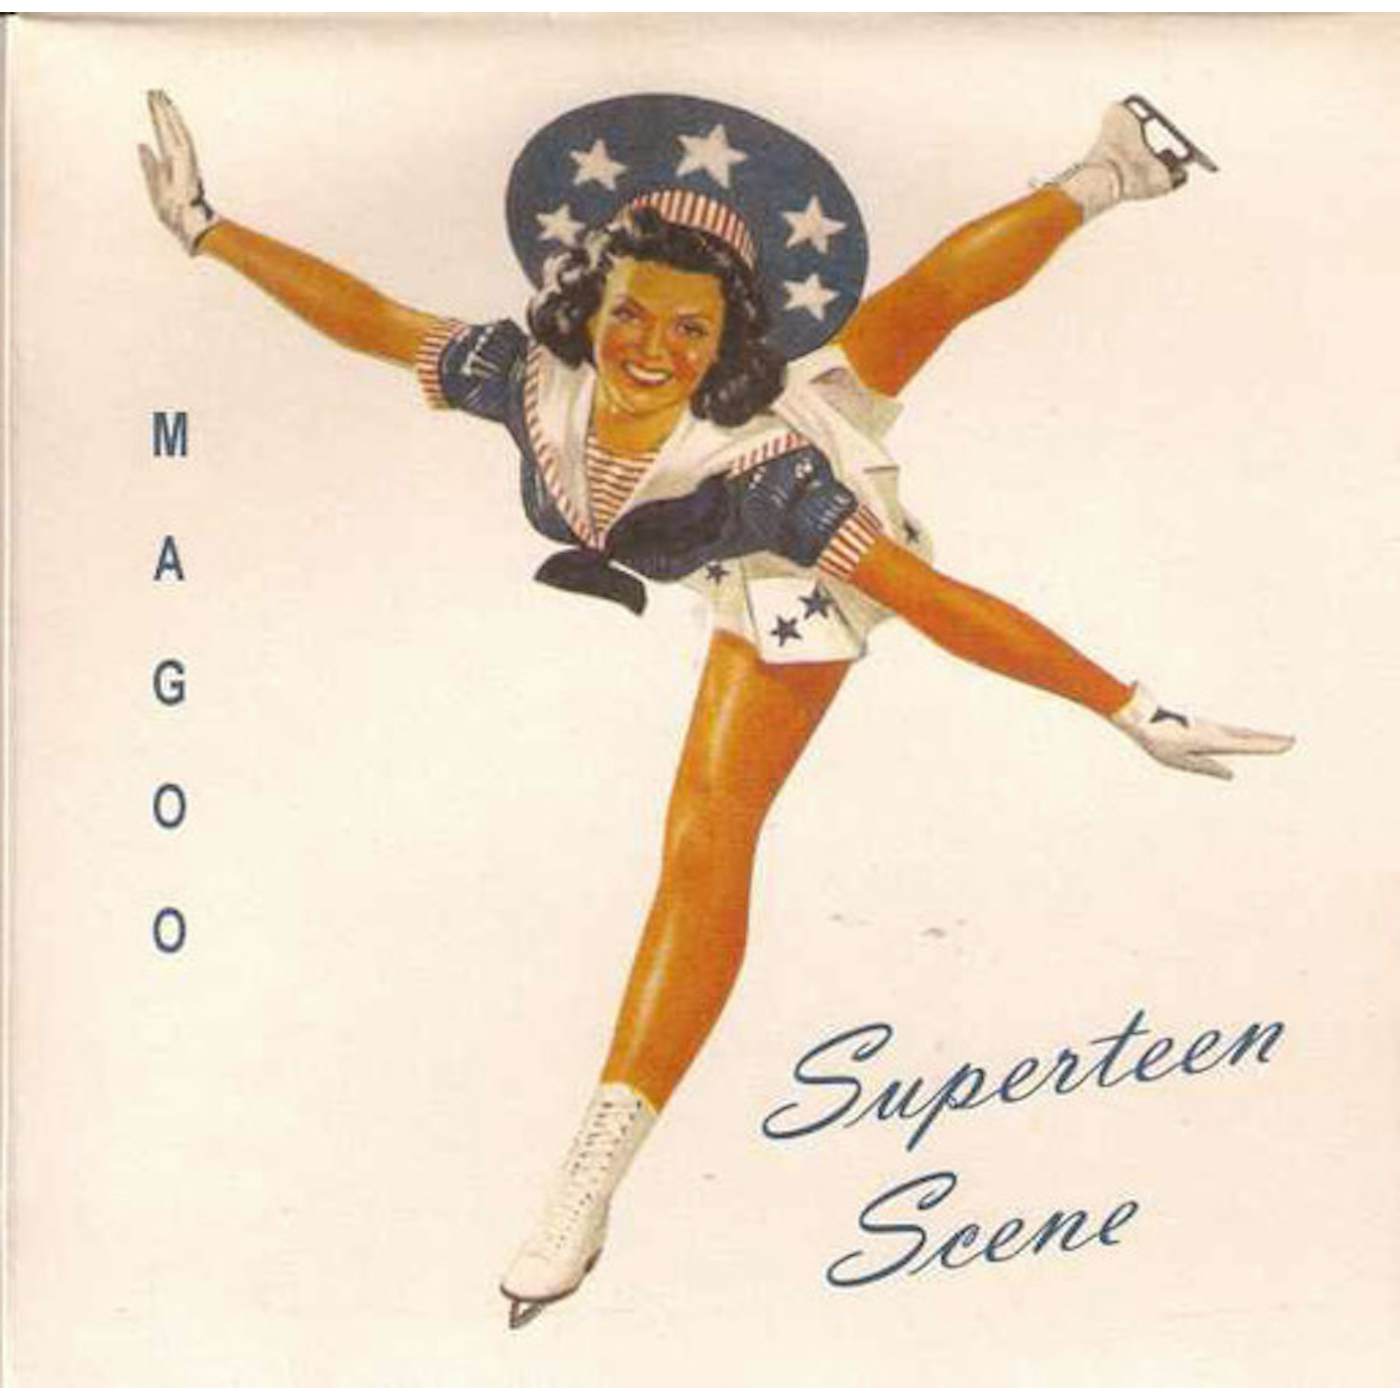 Magoo SUPER TEEN SCENE Vinyl Record